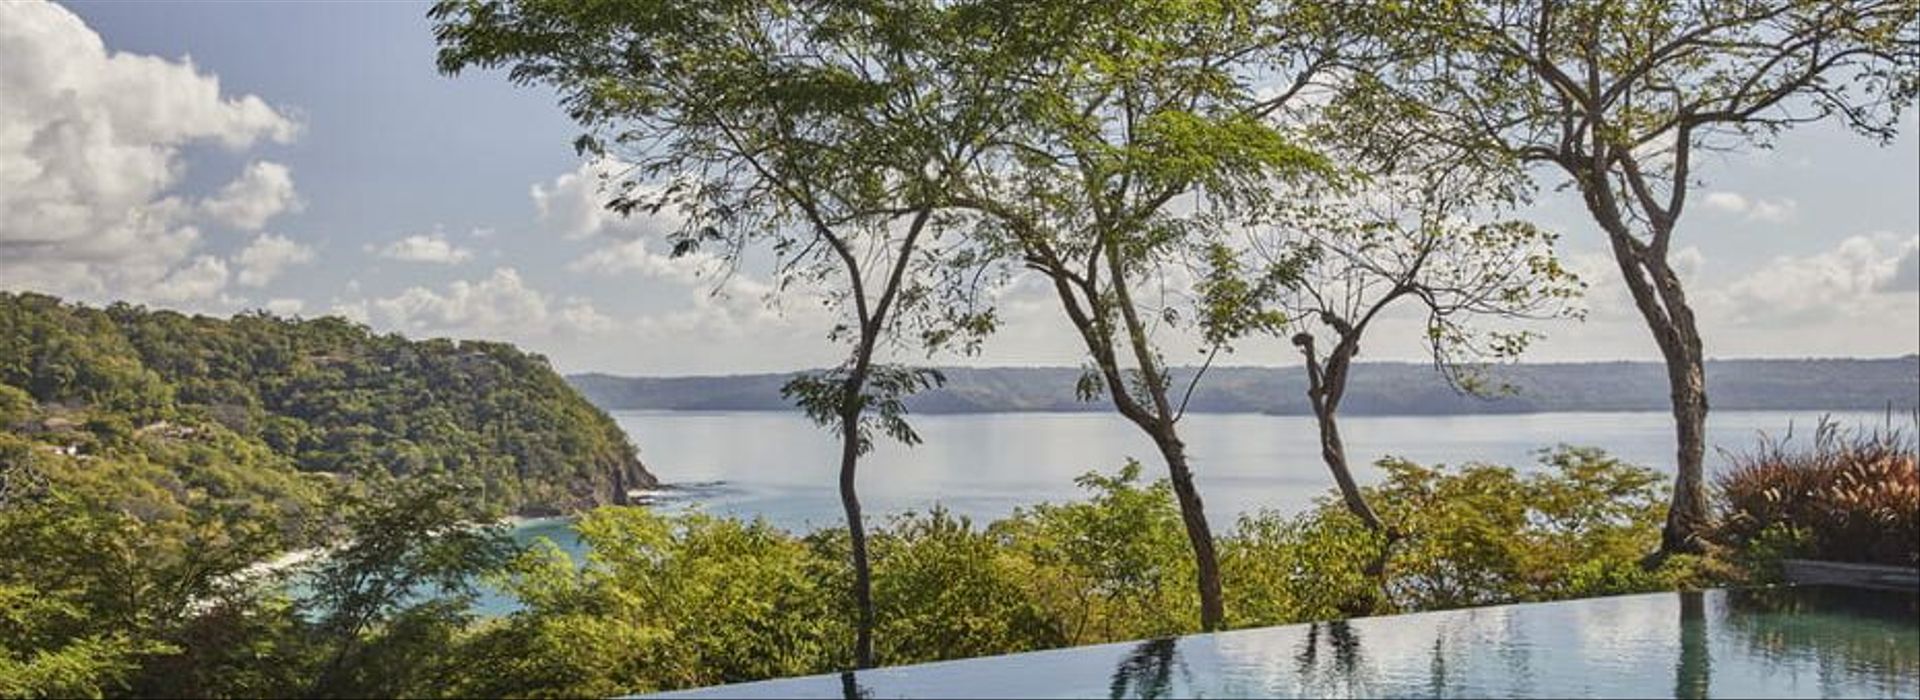 Four Seasons Resort Costa Rica Pool.jpg